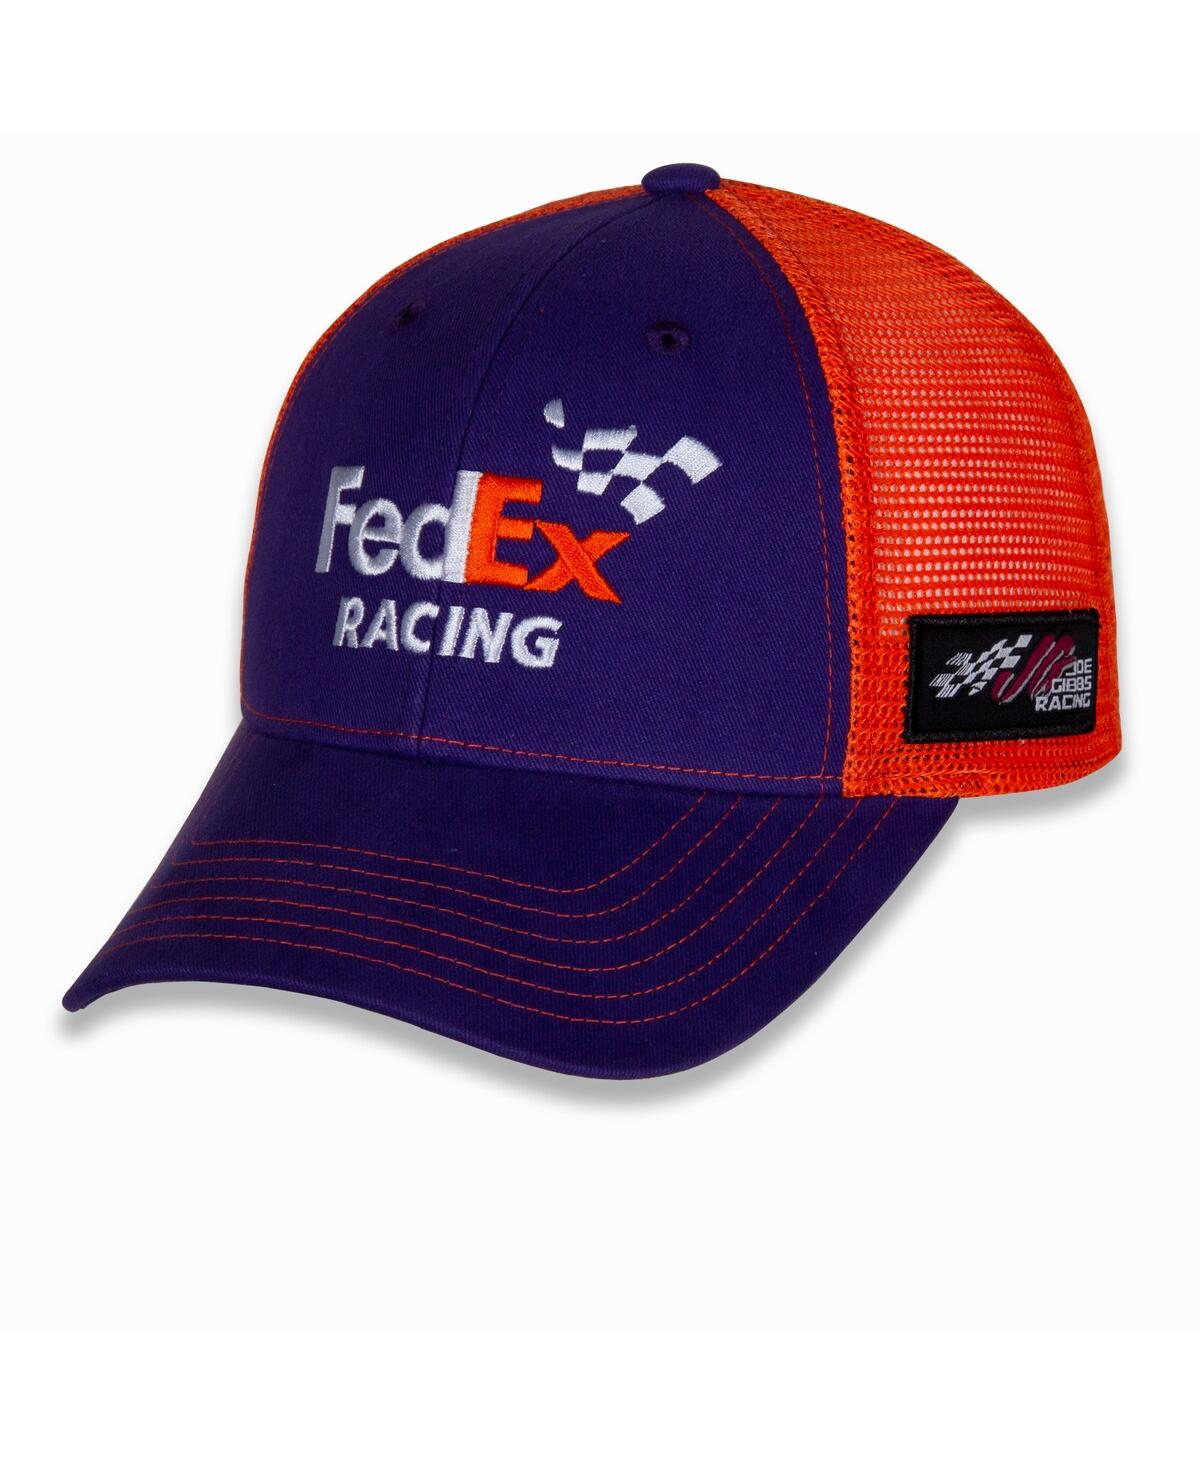 Men's Joe Gibbs Racing Team Collection Purple, Orange Denny Hamlin Team Sponsor Adjustable Hat - Purple, Orange